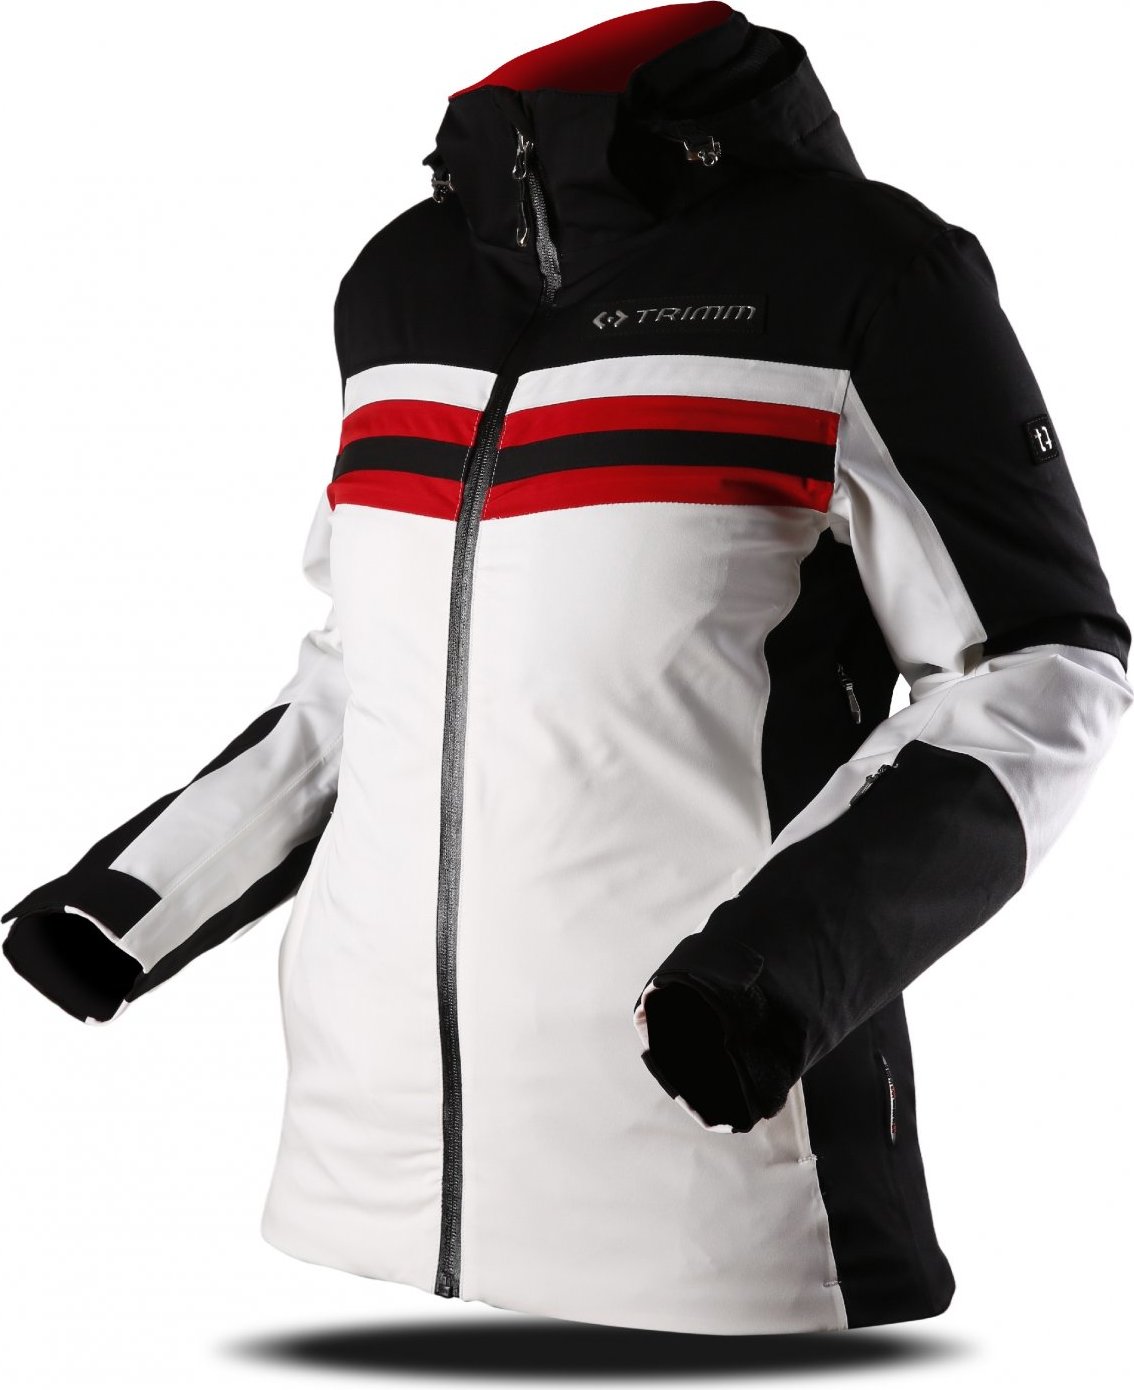 Dámská lyžařská bunda TRIMM Ilusion bílá Velikost: M, Barva: white/red/black